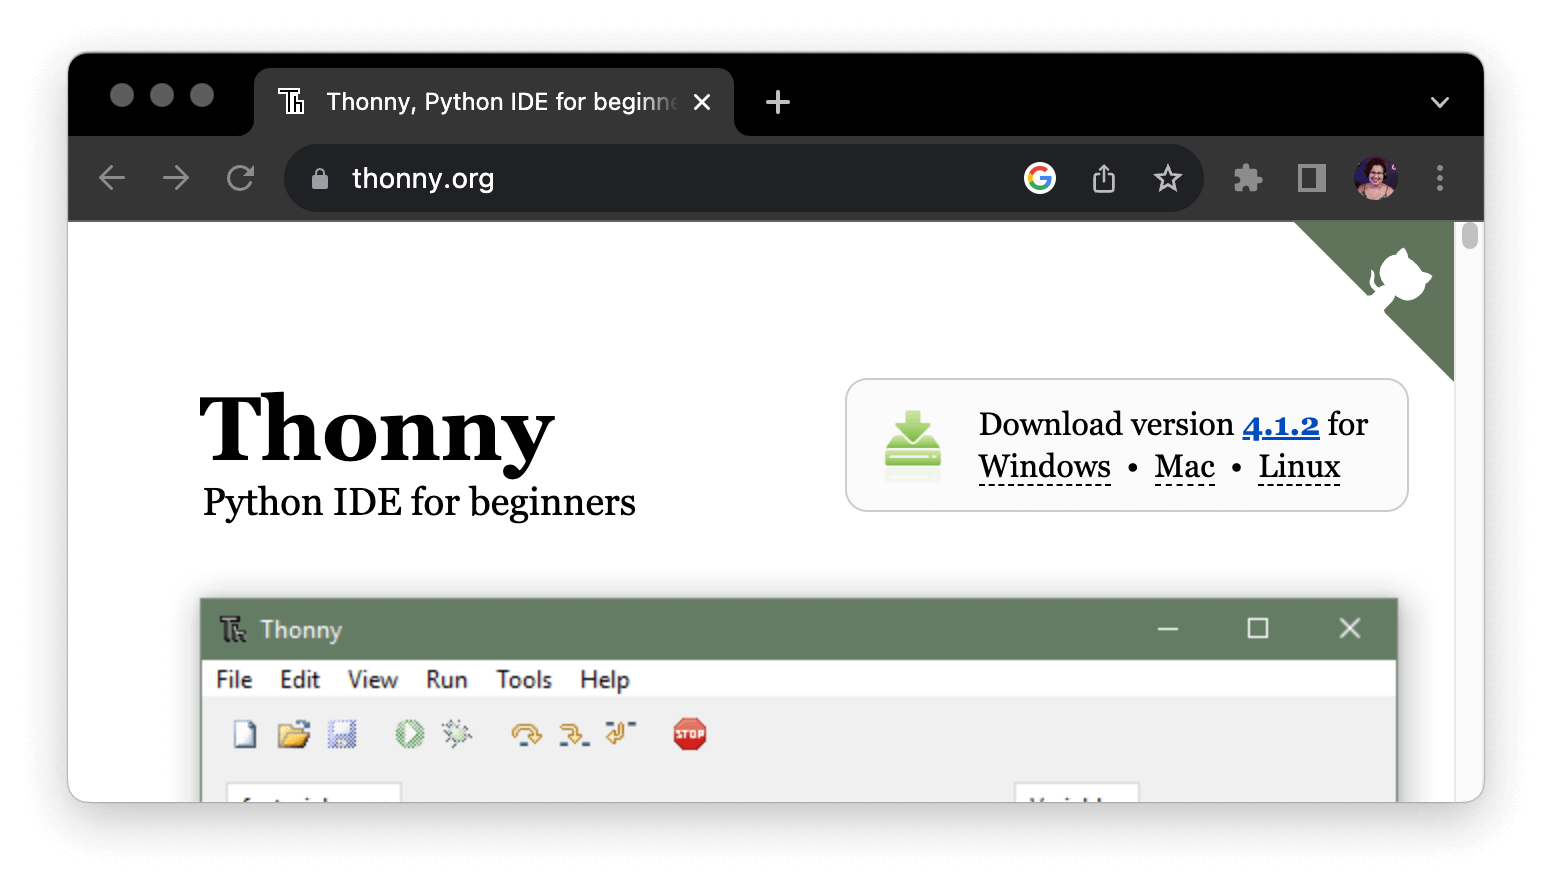 Thonny website